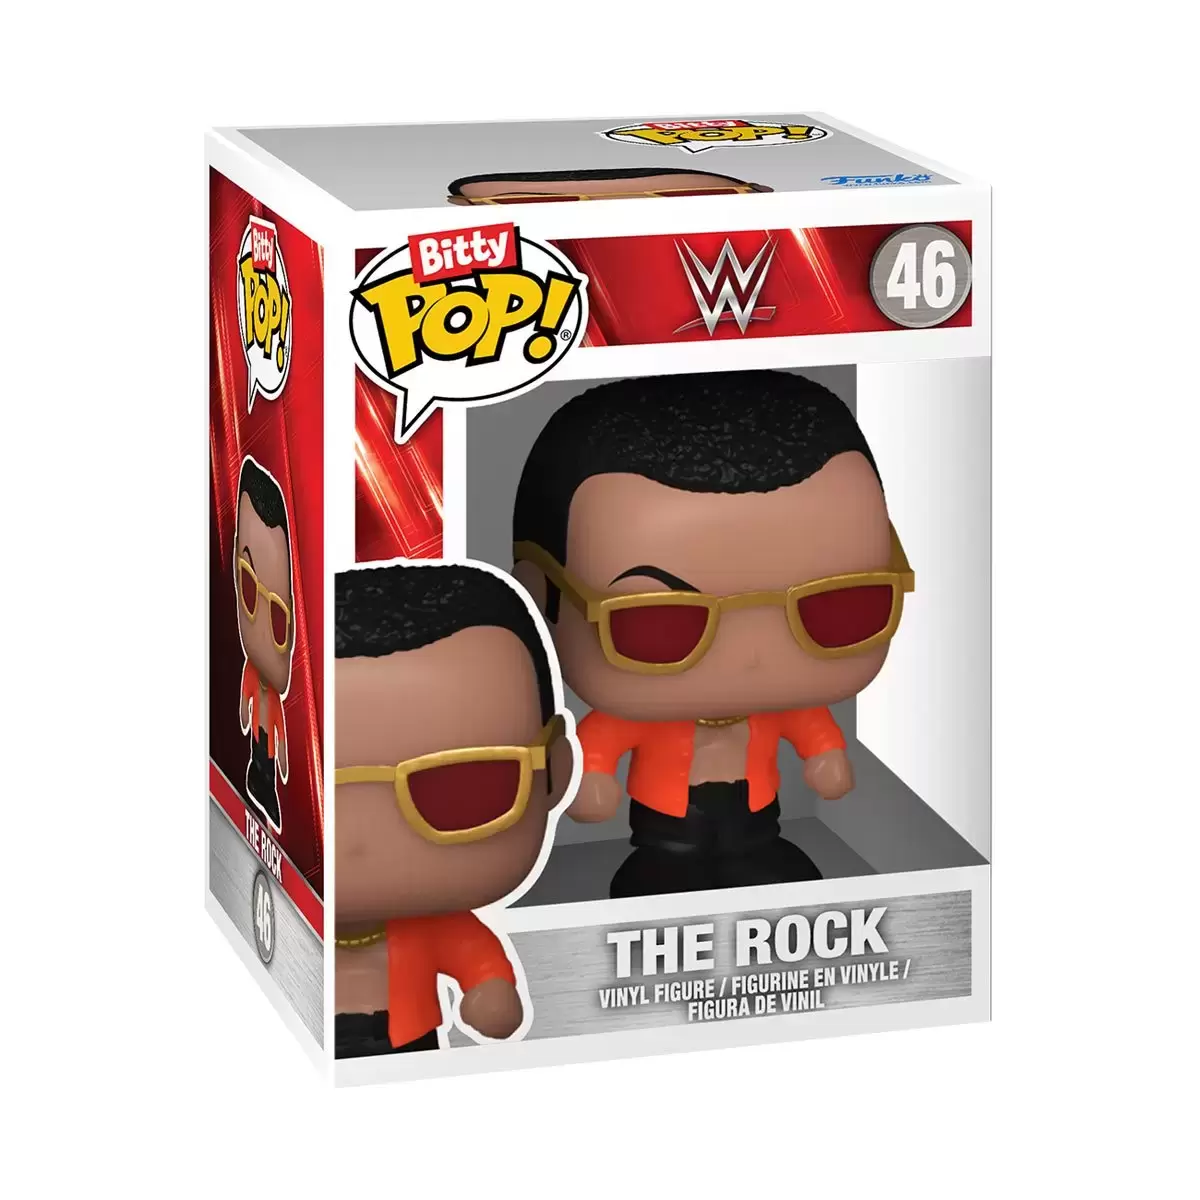 Bitty POP! - WWE - The Rock